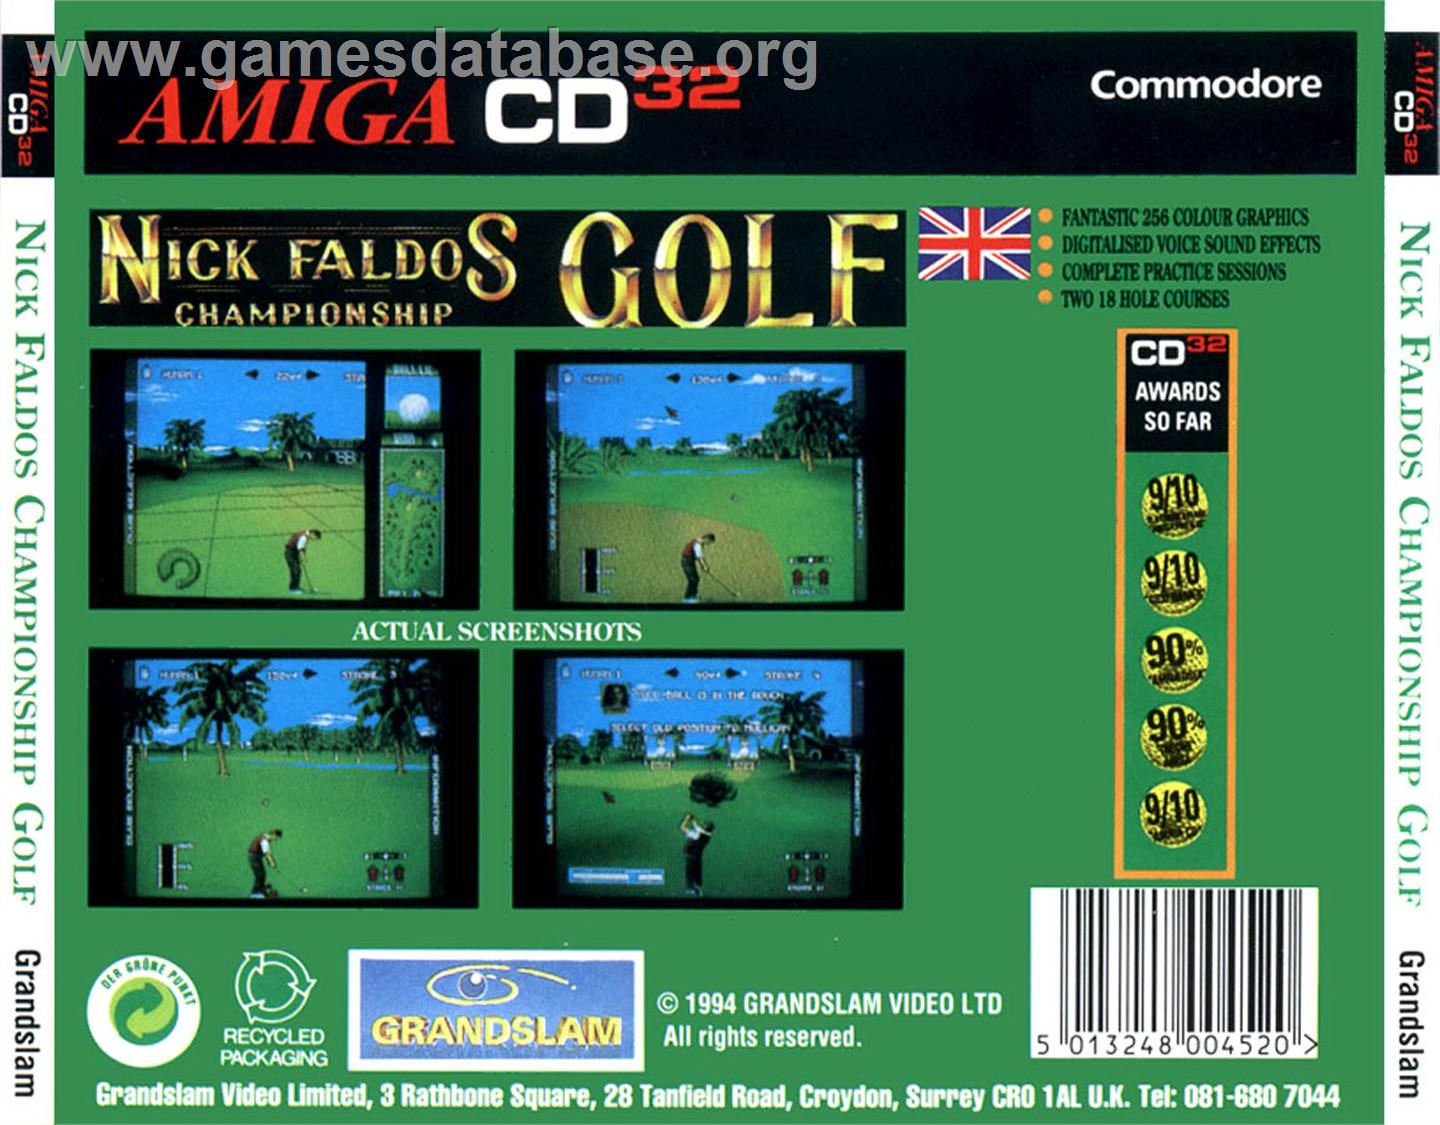 Nick Faldo's Championship Golf - Commodore Amiga CD32 - Artwork - Box Back